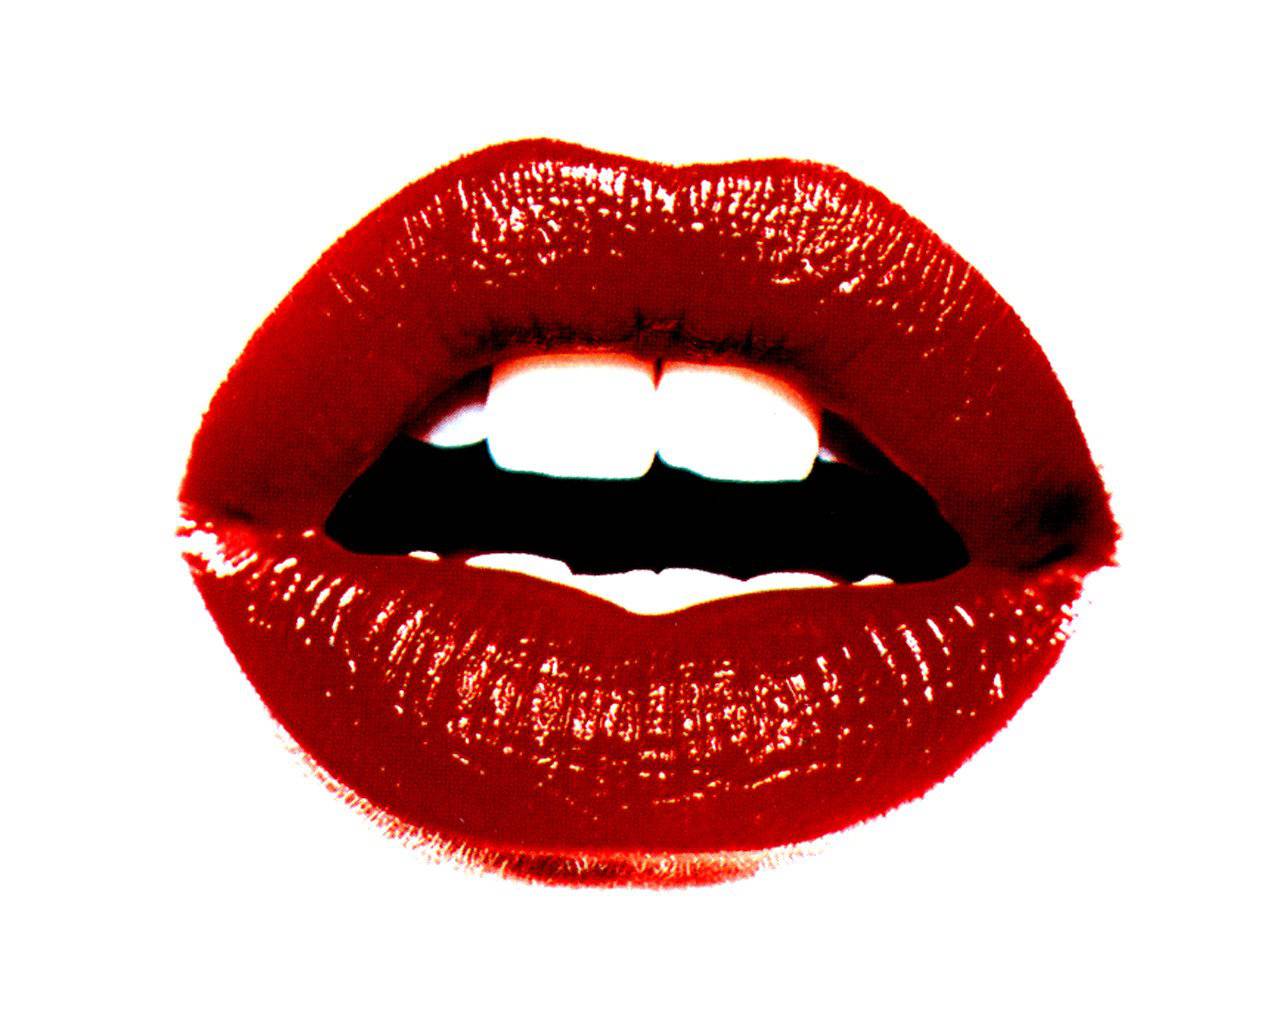 Lips Wallpaper